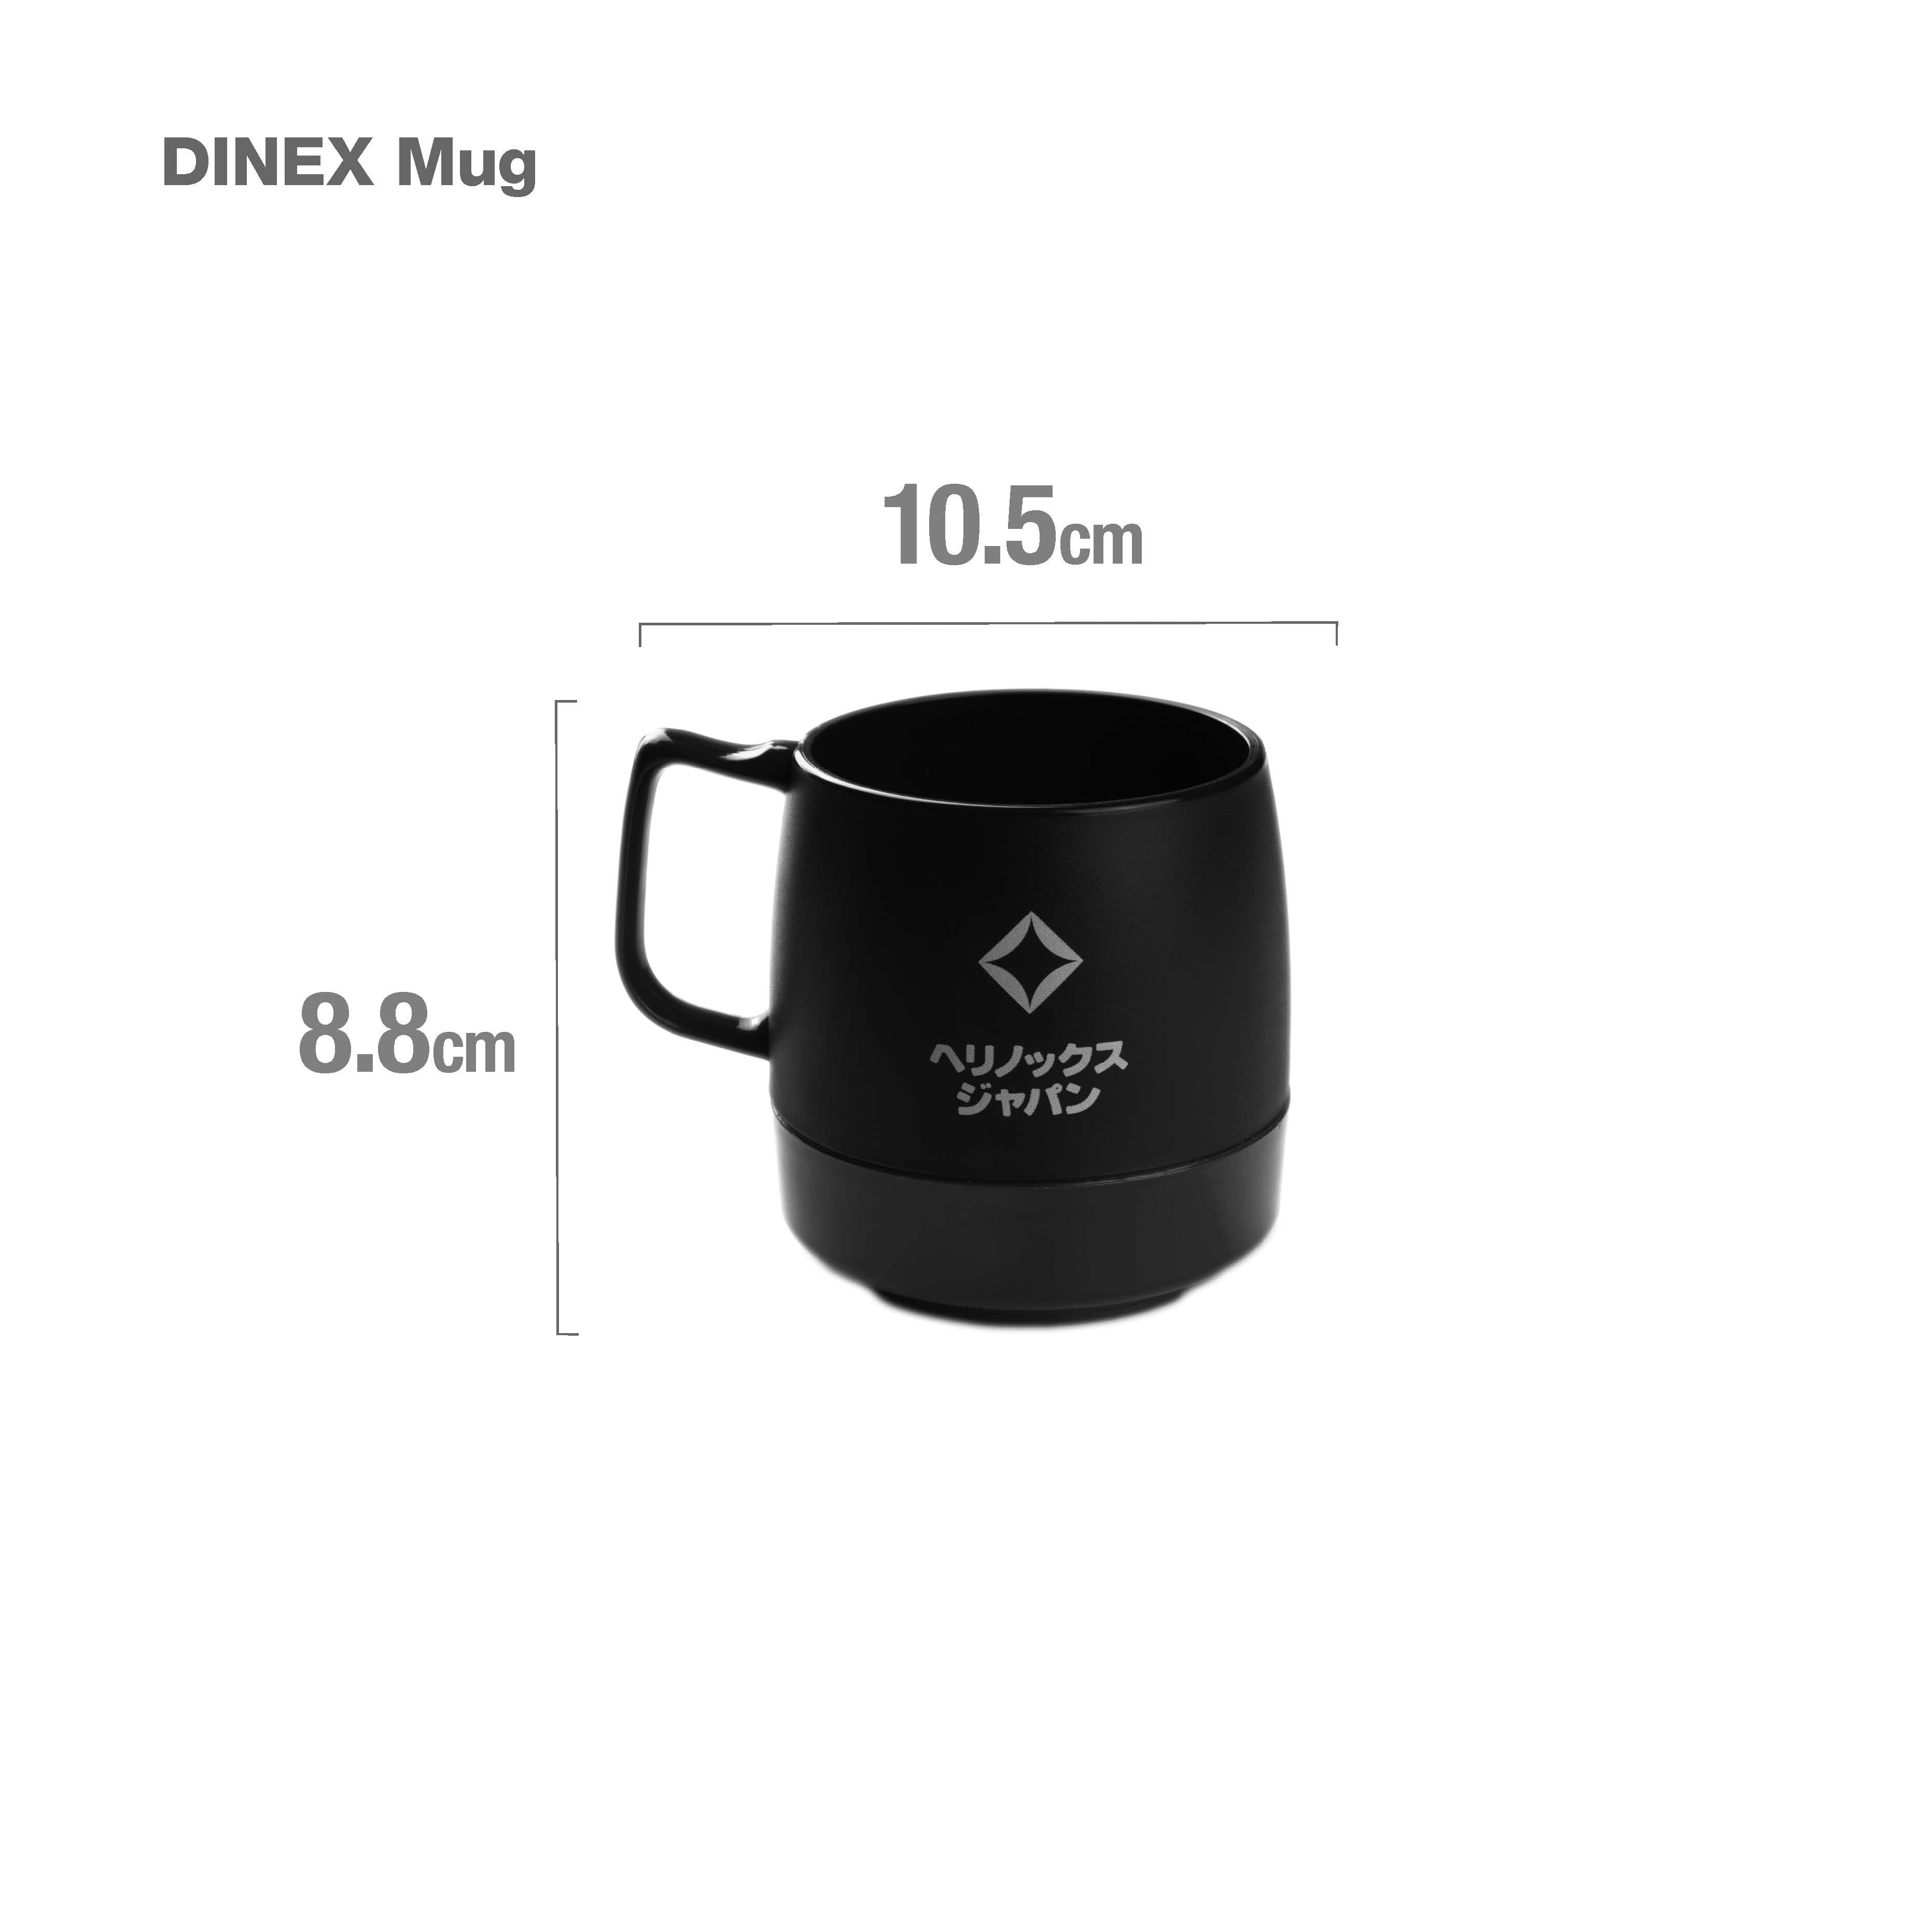 Dinex Mug - Black/White